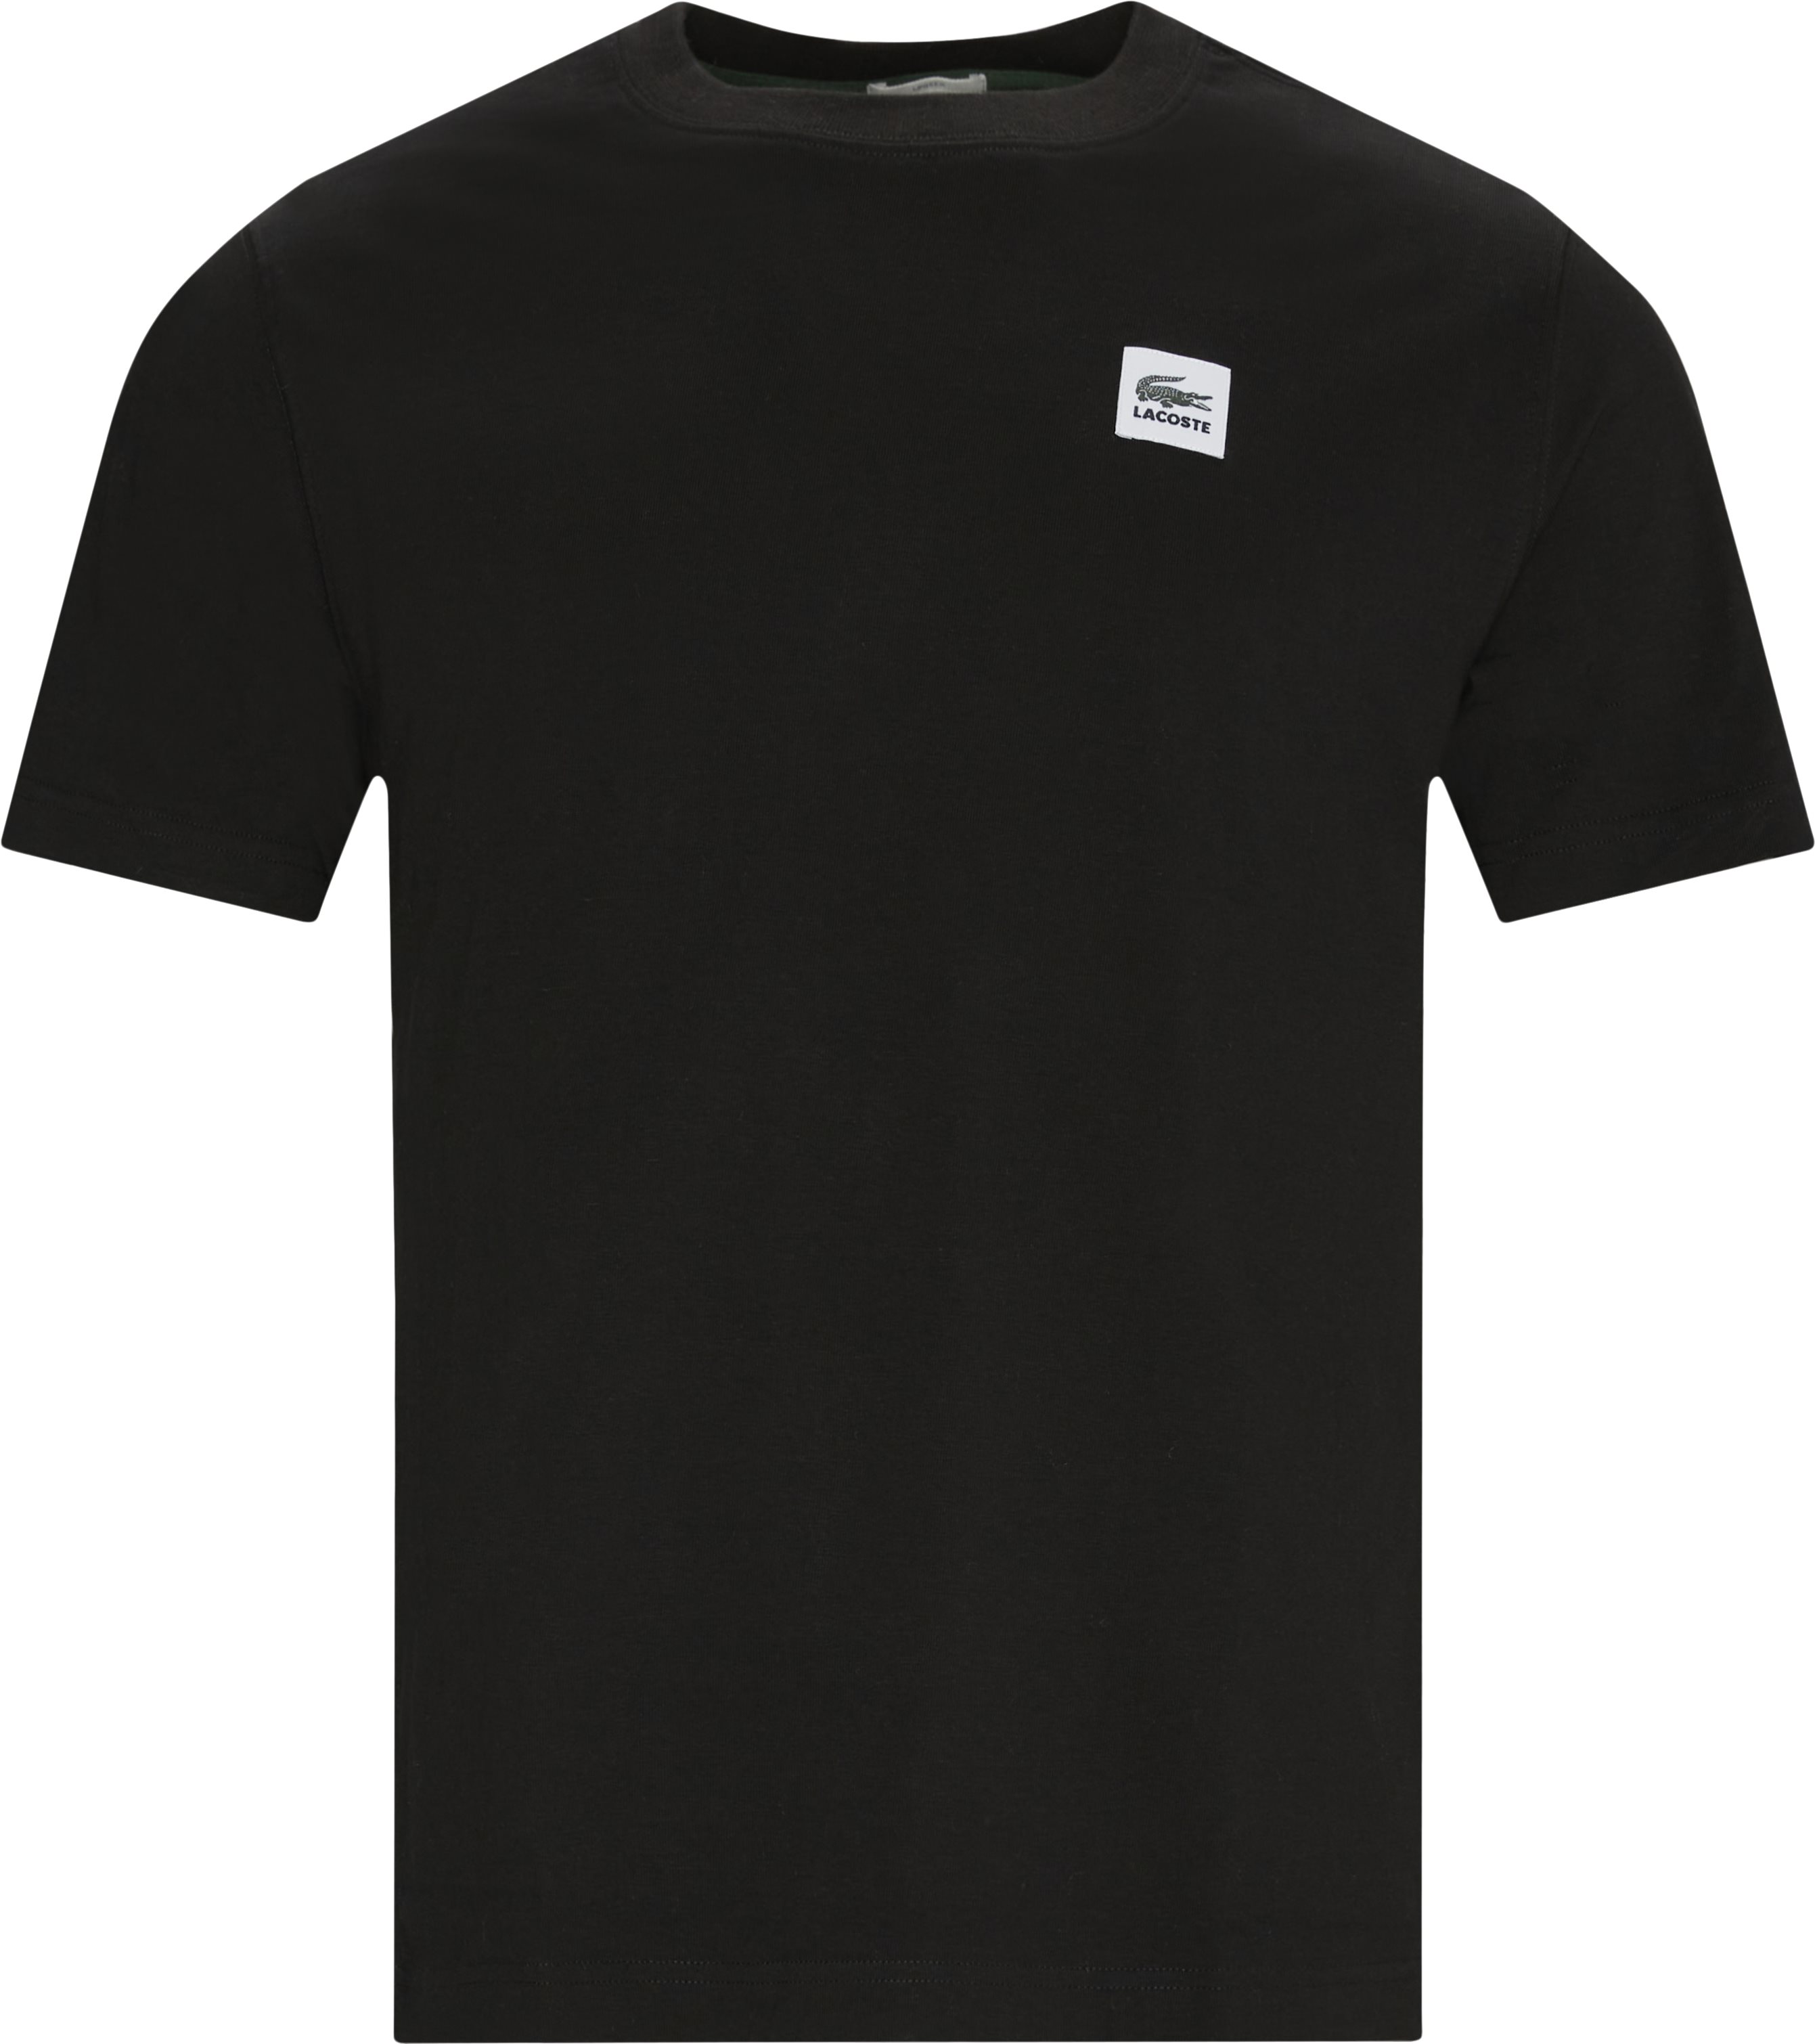 Logotröja - T-shirts - Regular fit - Svart